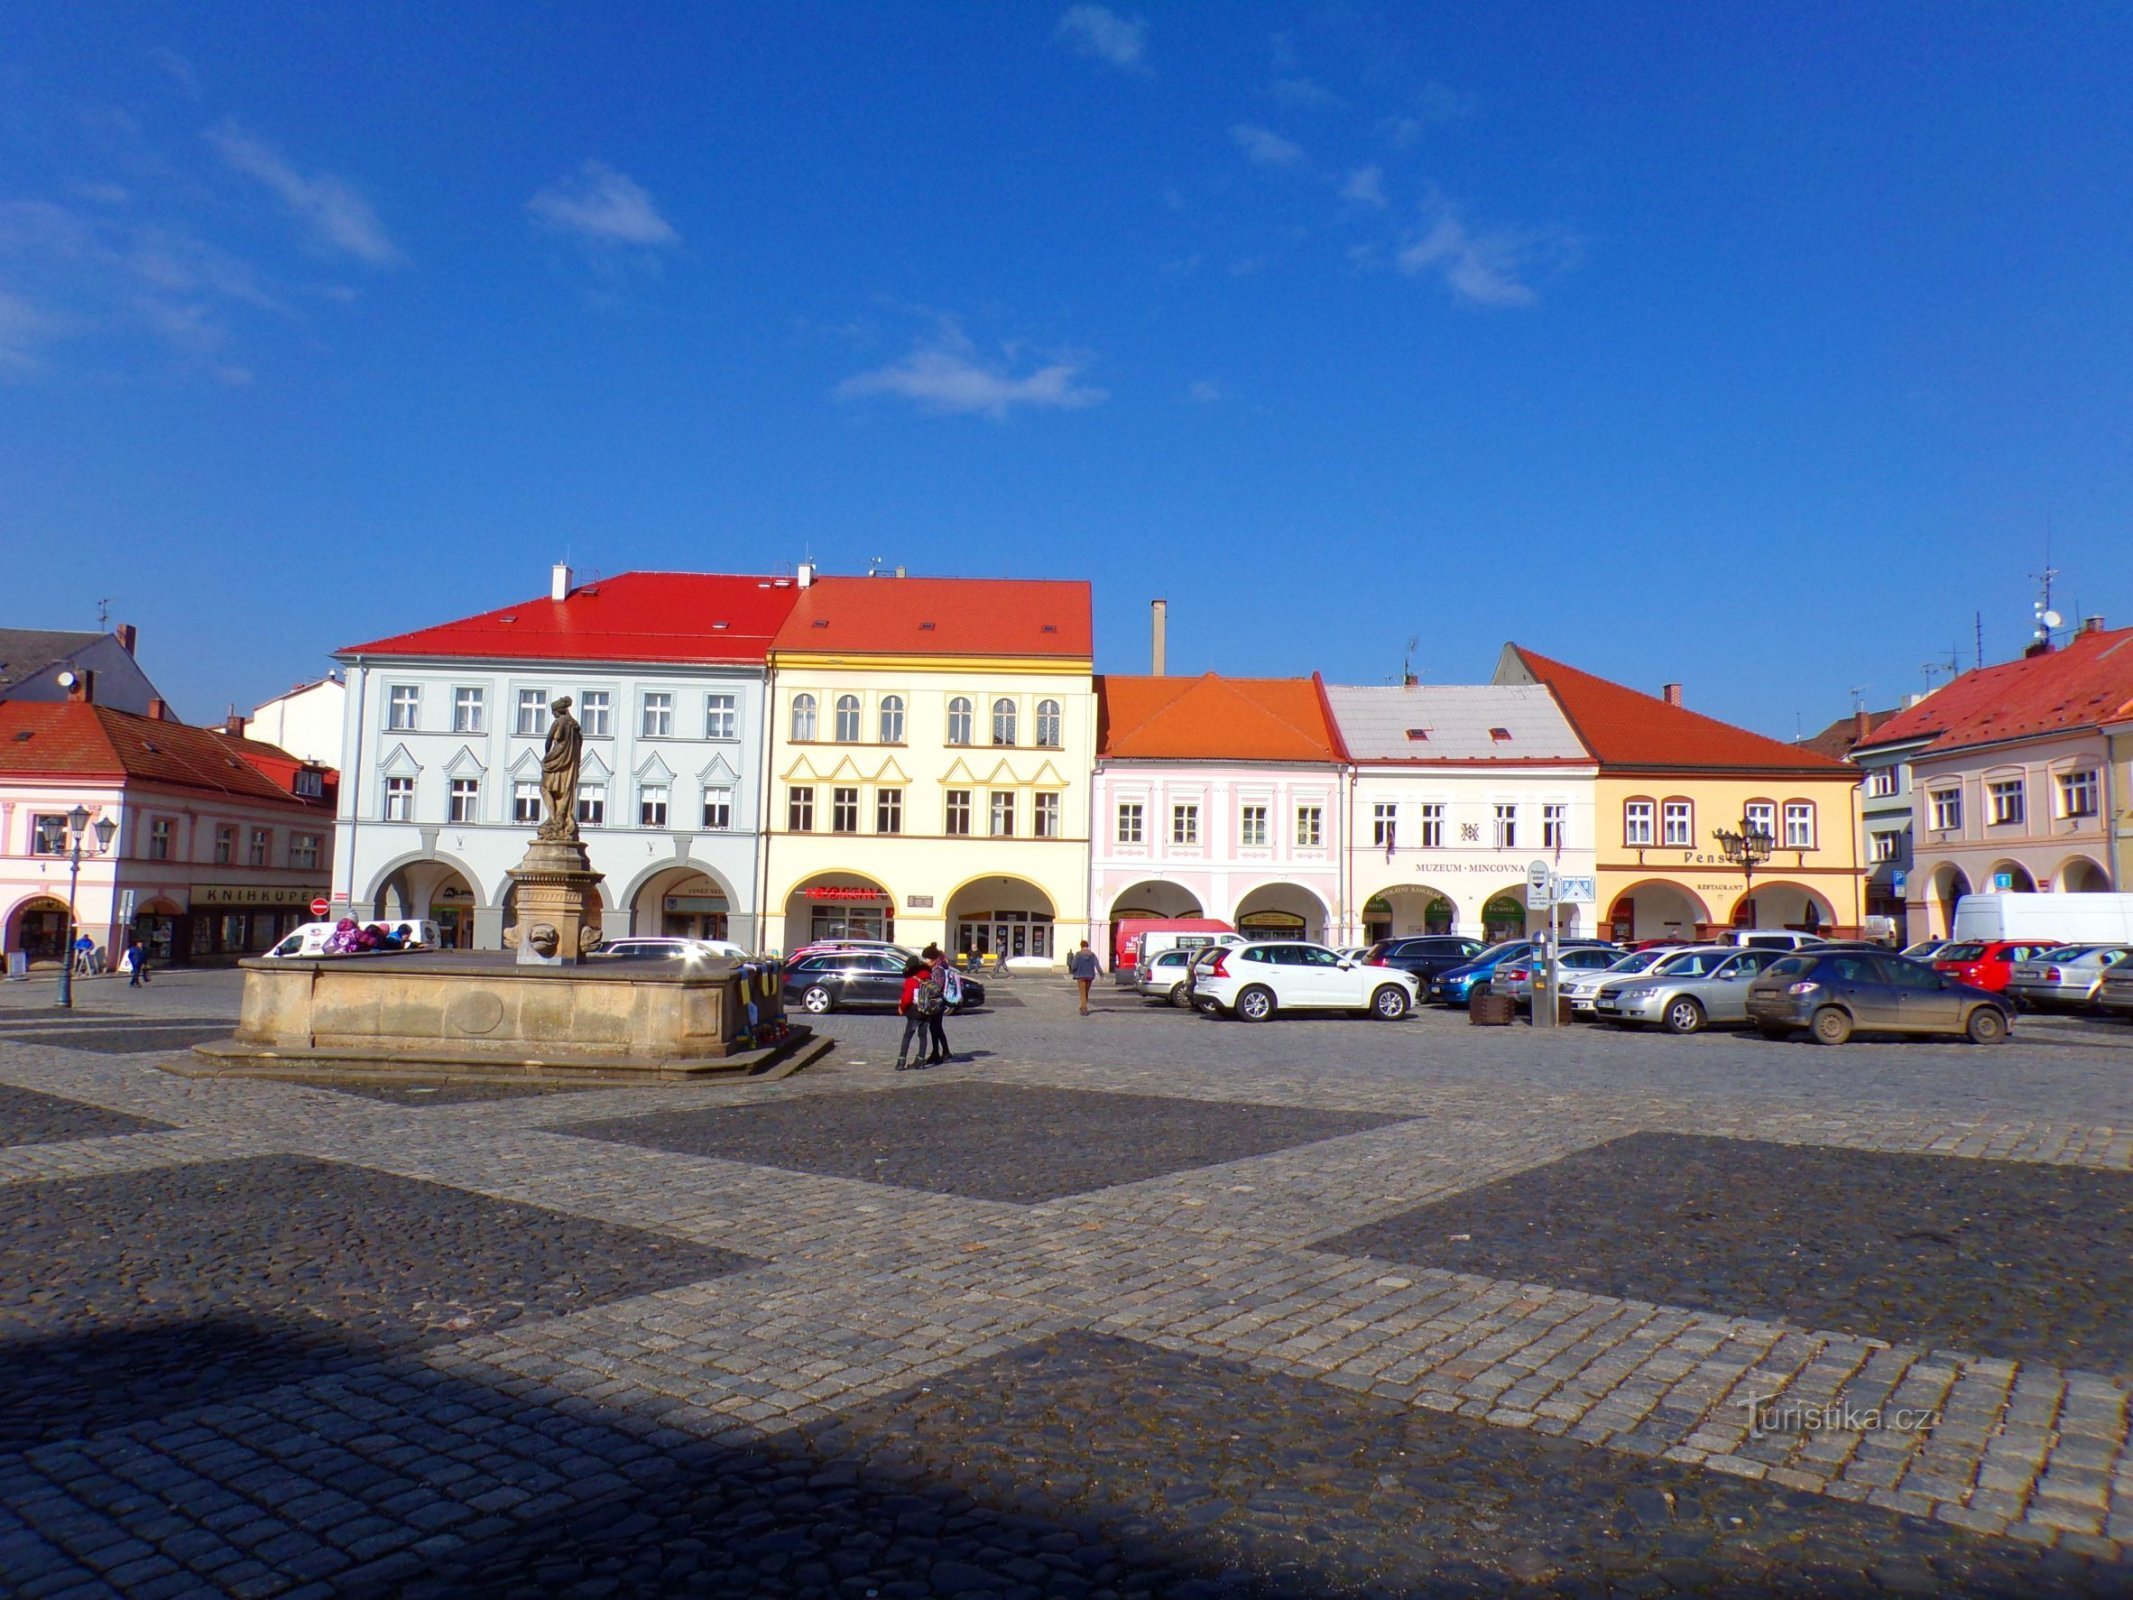 Palackého nr. 73 tot Valdštejnovo náměstí nr. 77 (Jičín, 3.3.2022/XNUMX/XNUMX)